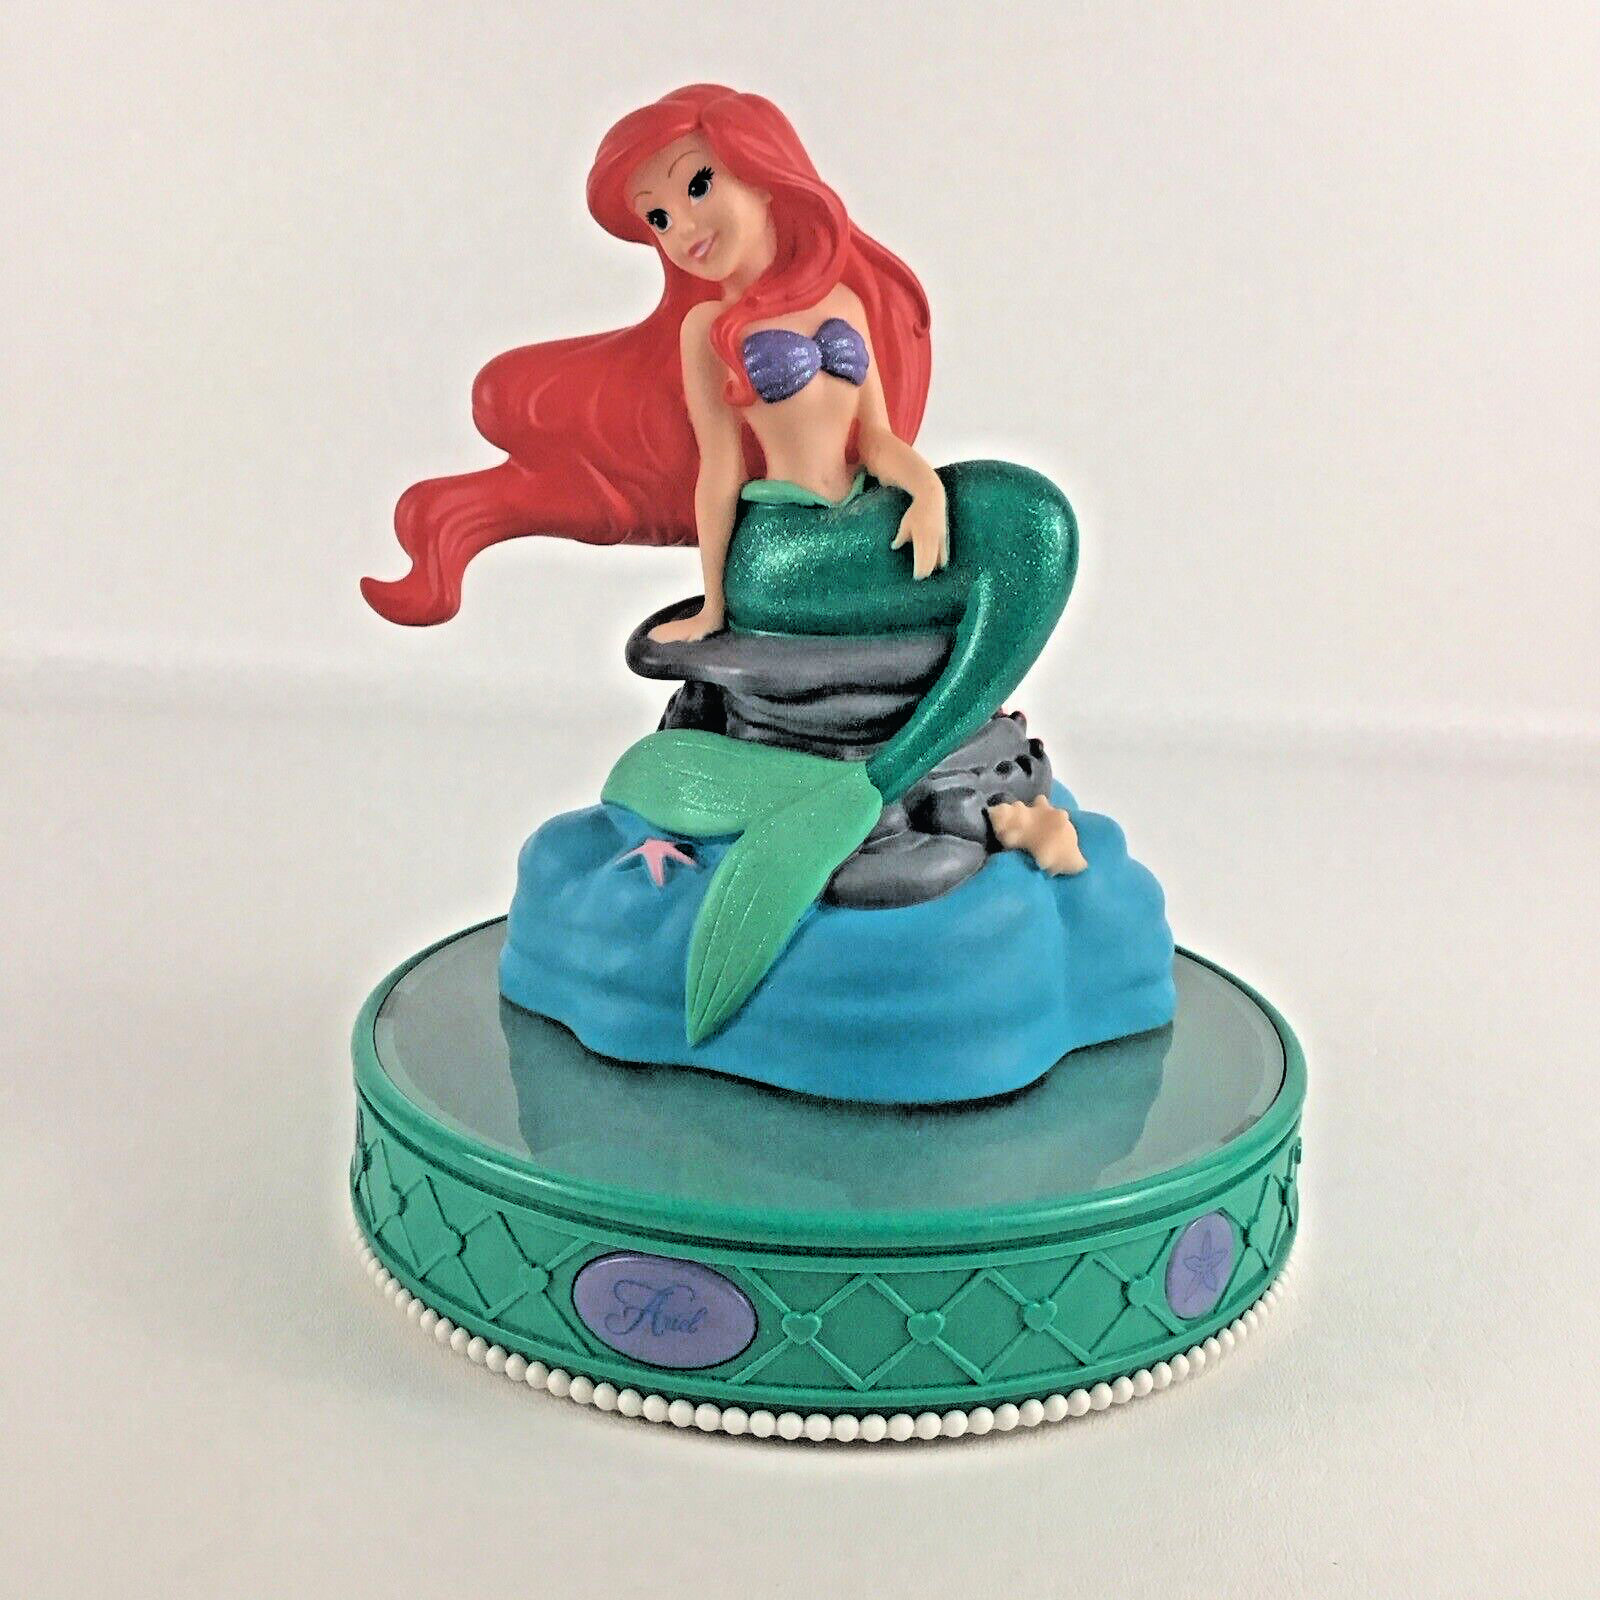 Disney Princess The Little Mermaid Ariel Musical Singing Light Up Coin Bank 2014 - $44.50